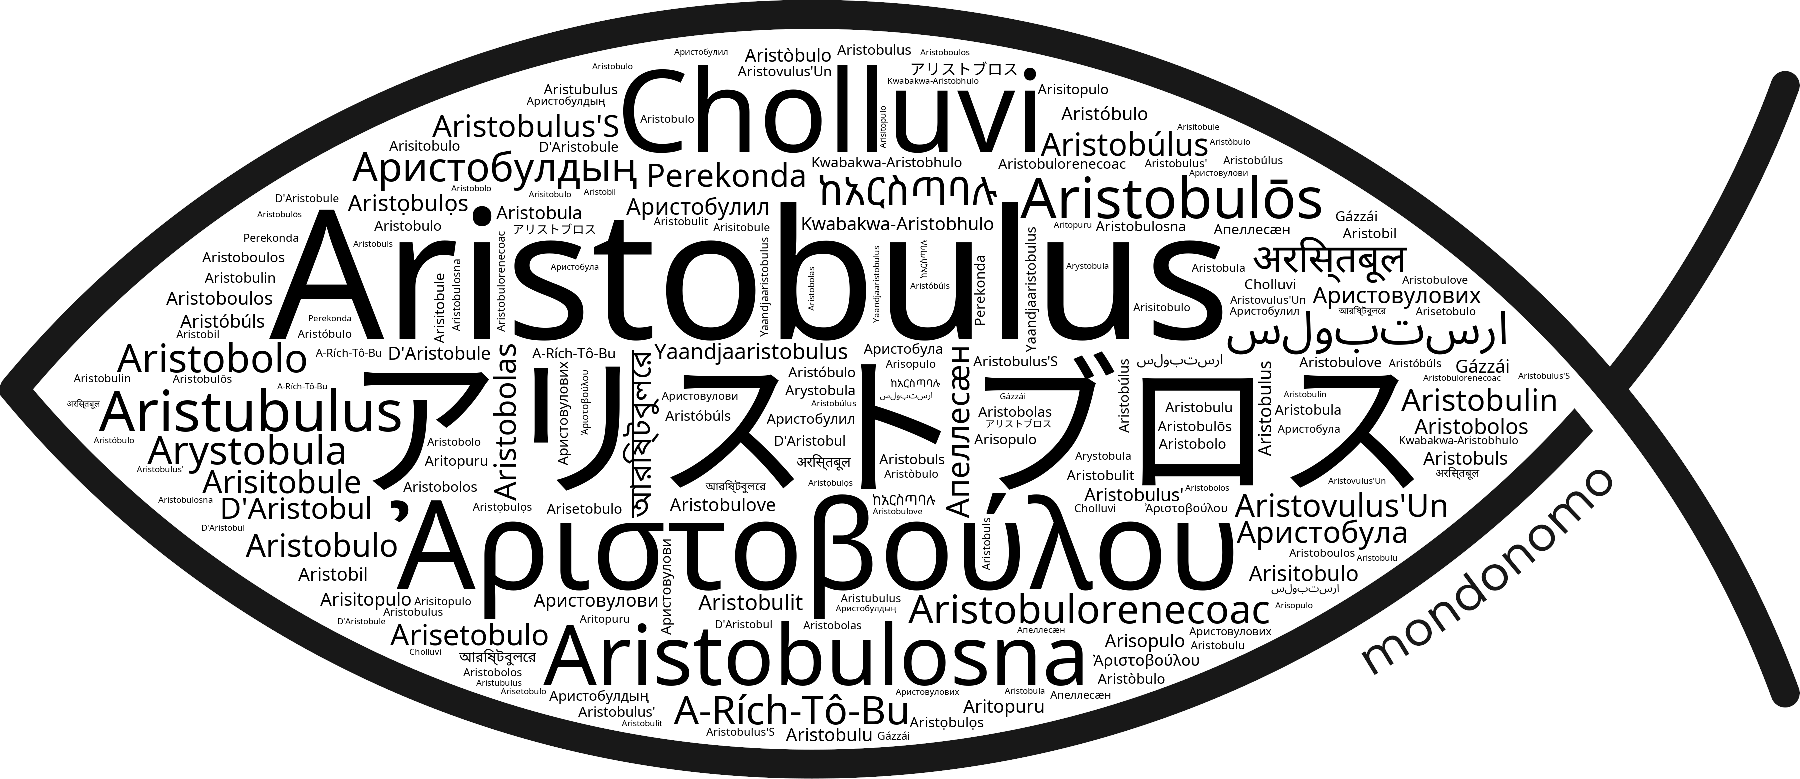 Name Aristobulus in the world's Bibles